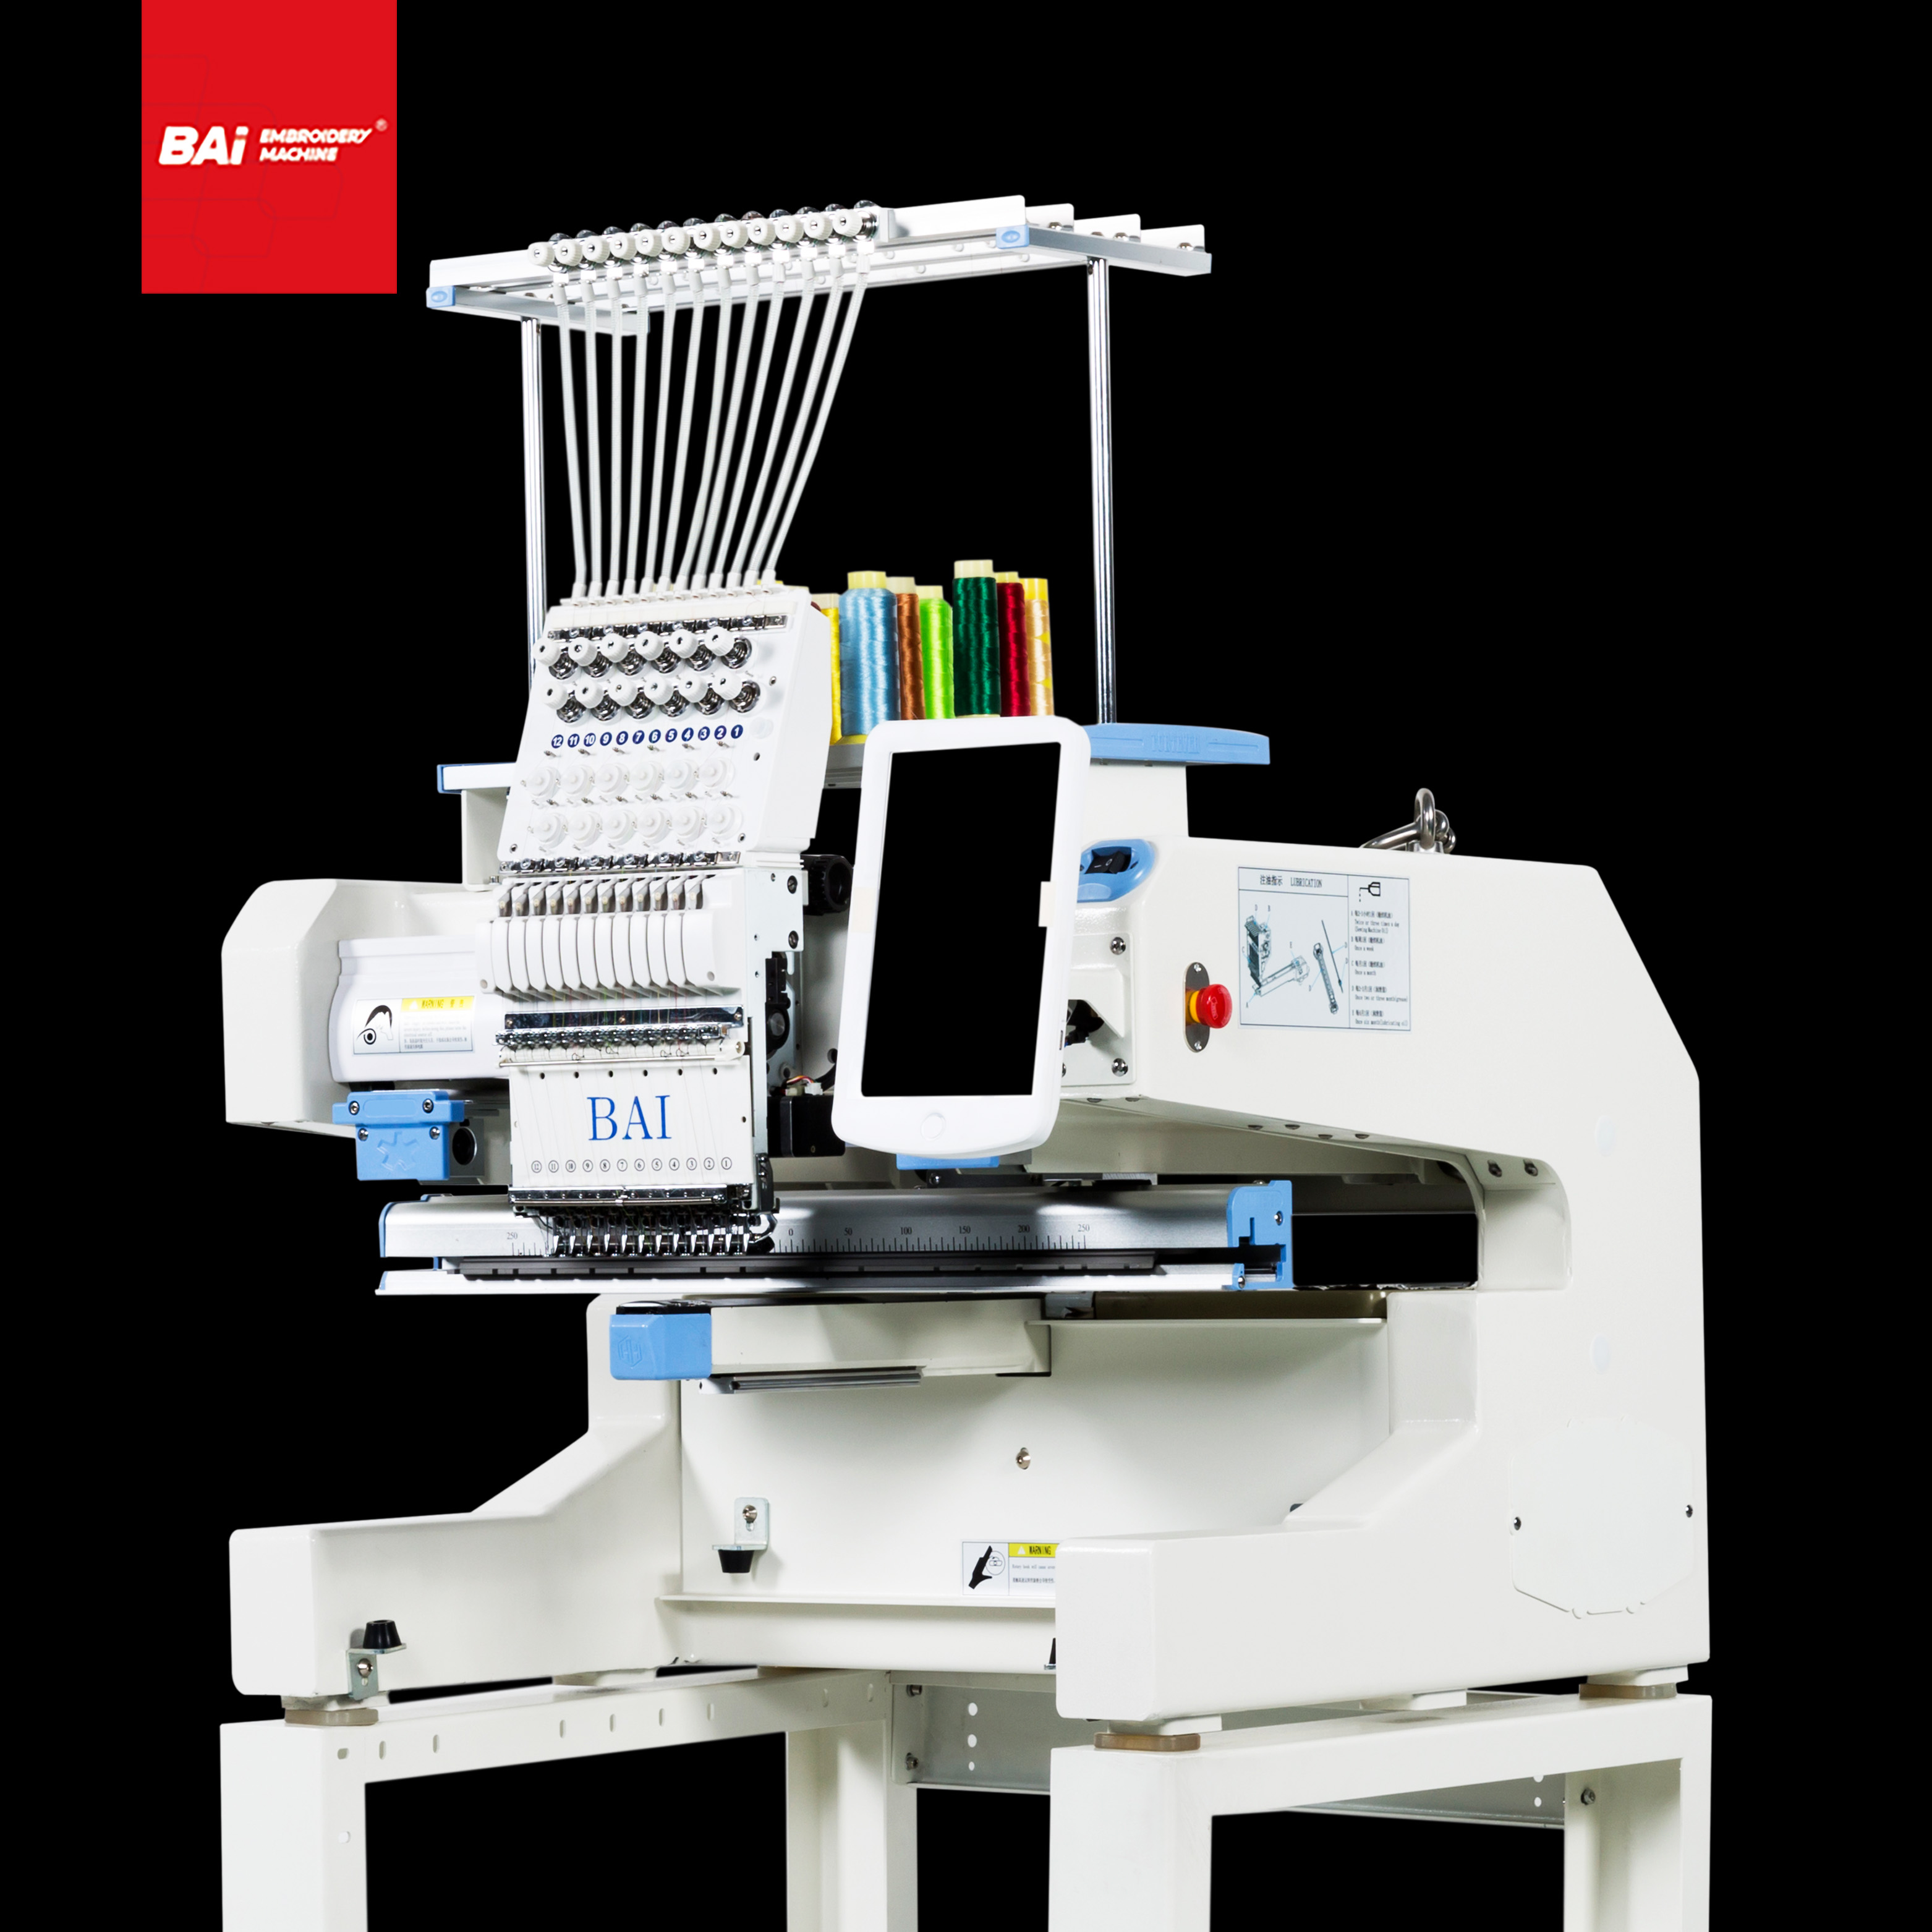 BAI Small Computerized Embroidery Machine for Machine Embroidery Designs